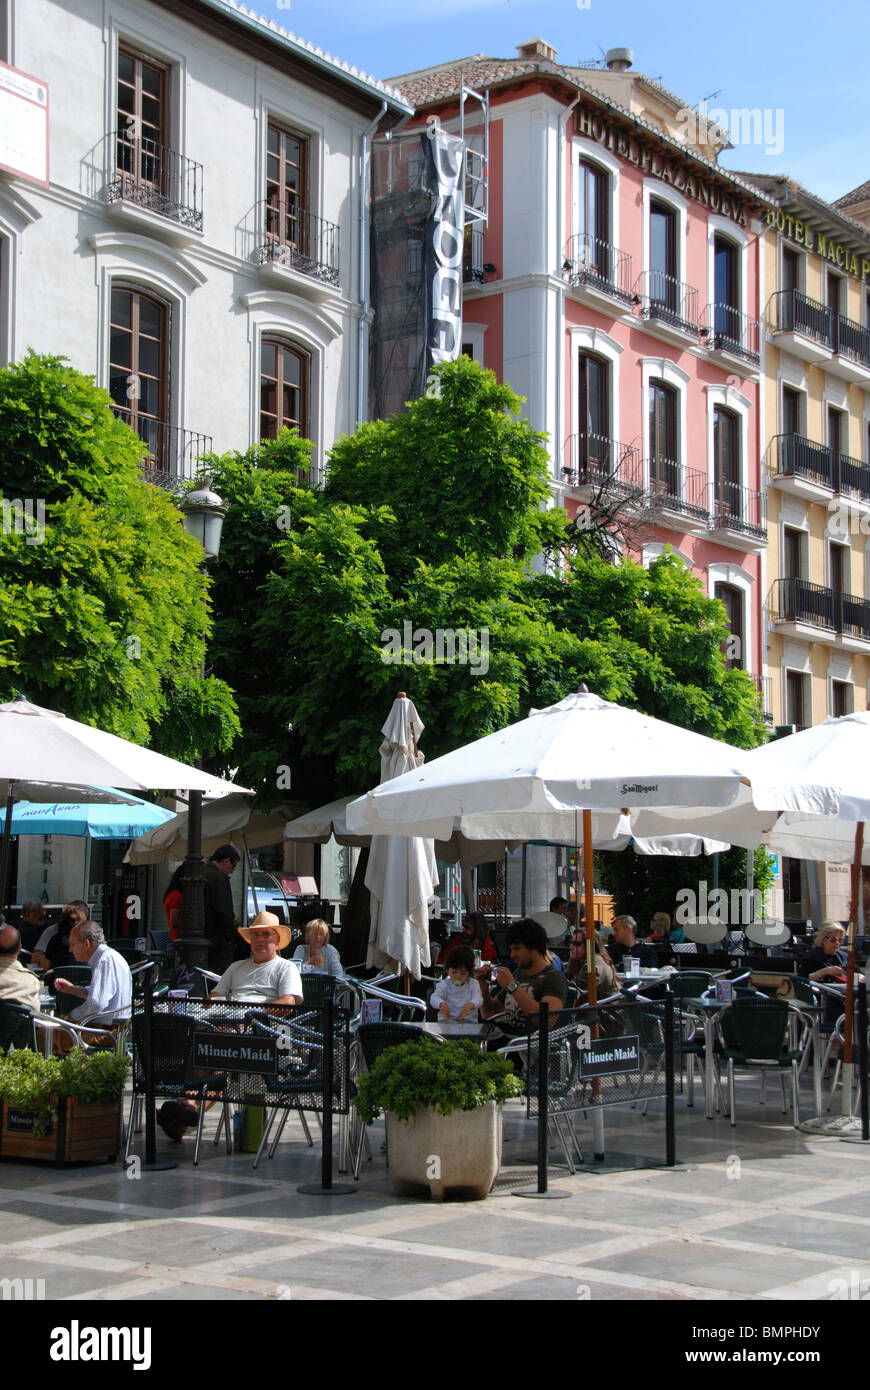 Pavement cafes in the Plaza Nueva, Granada, Granada Province, Andalucia, Spain, Western Europe. Stock Photo